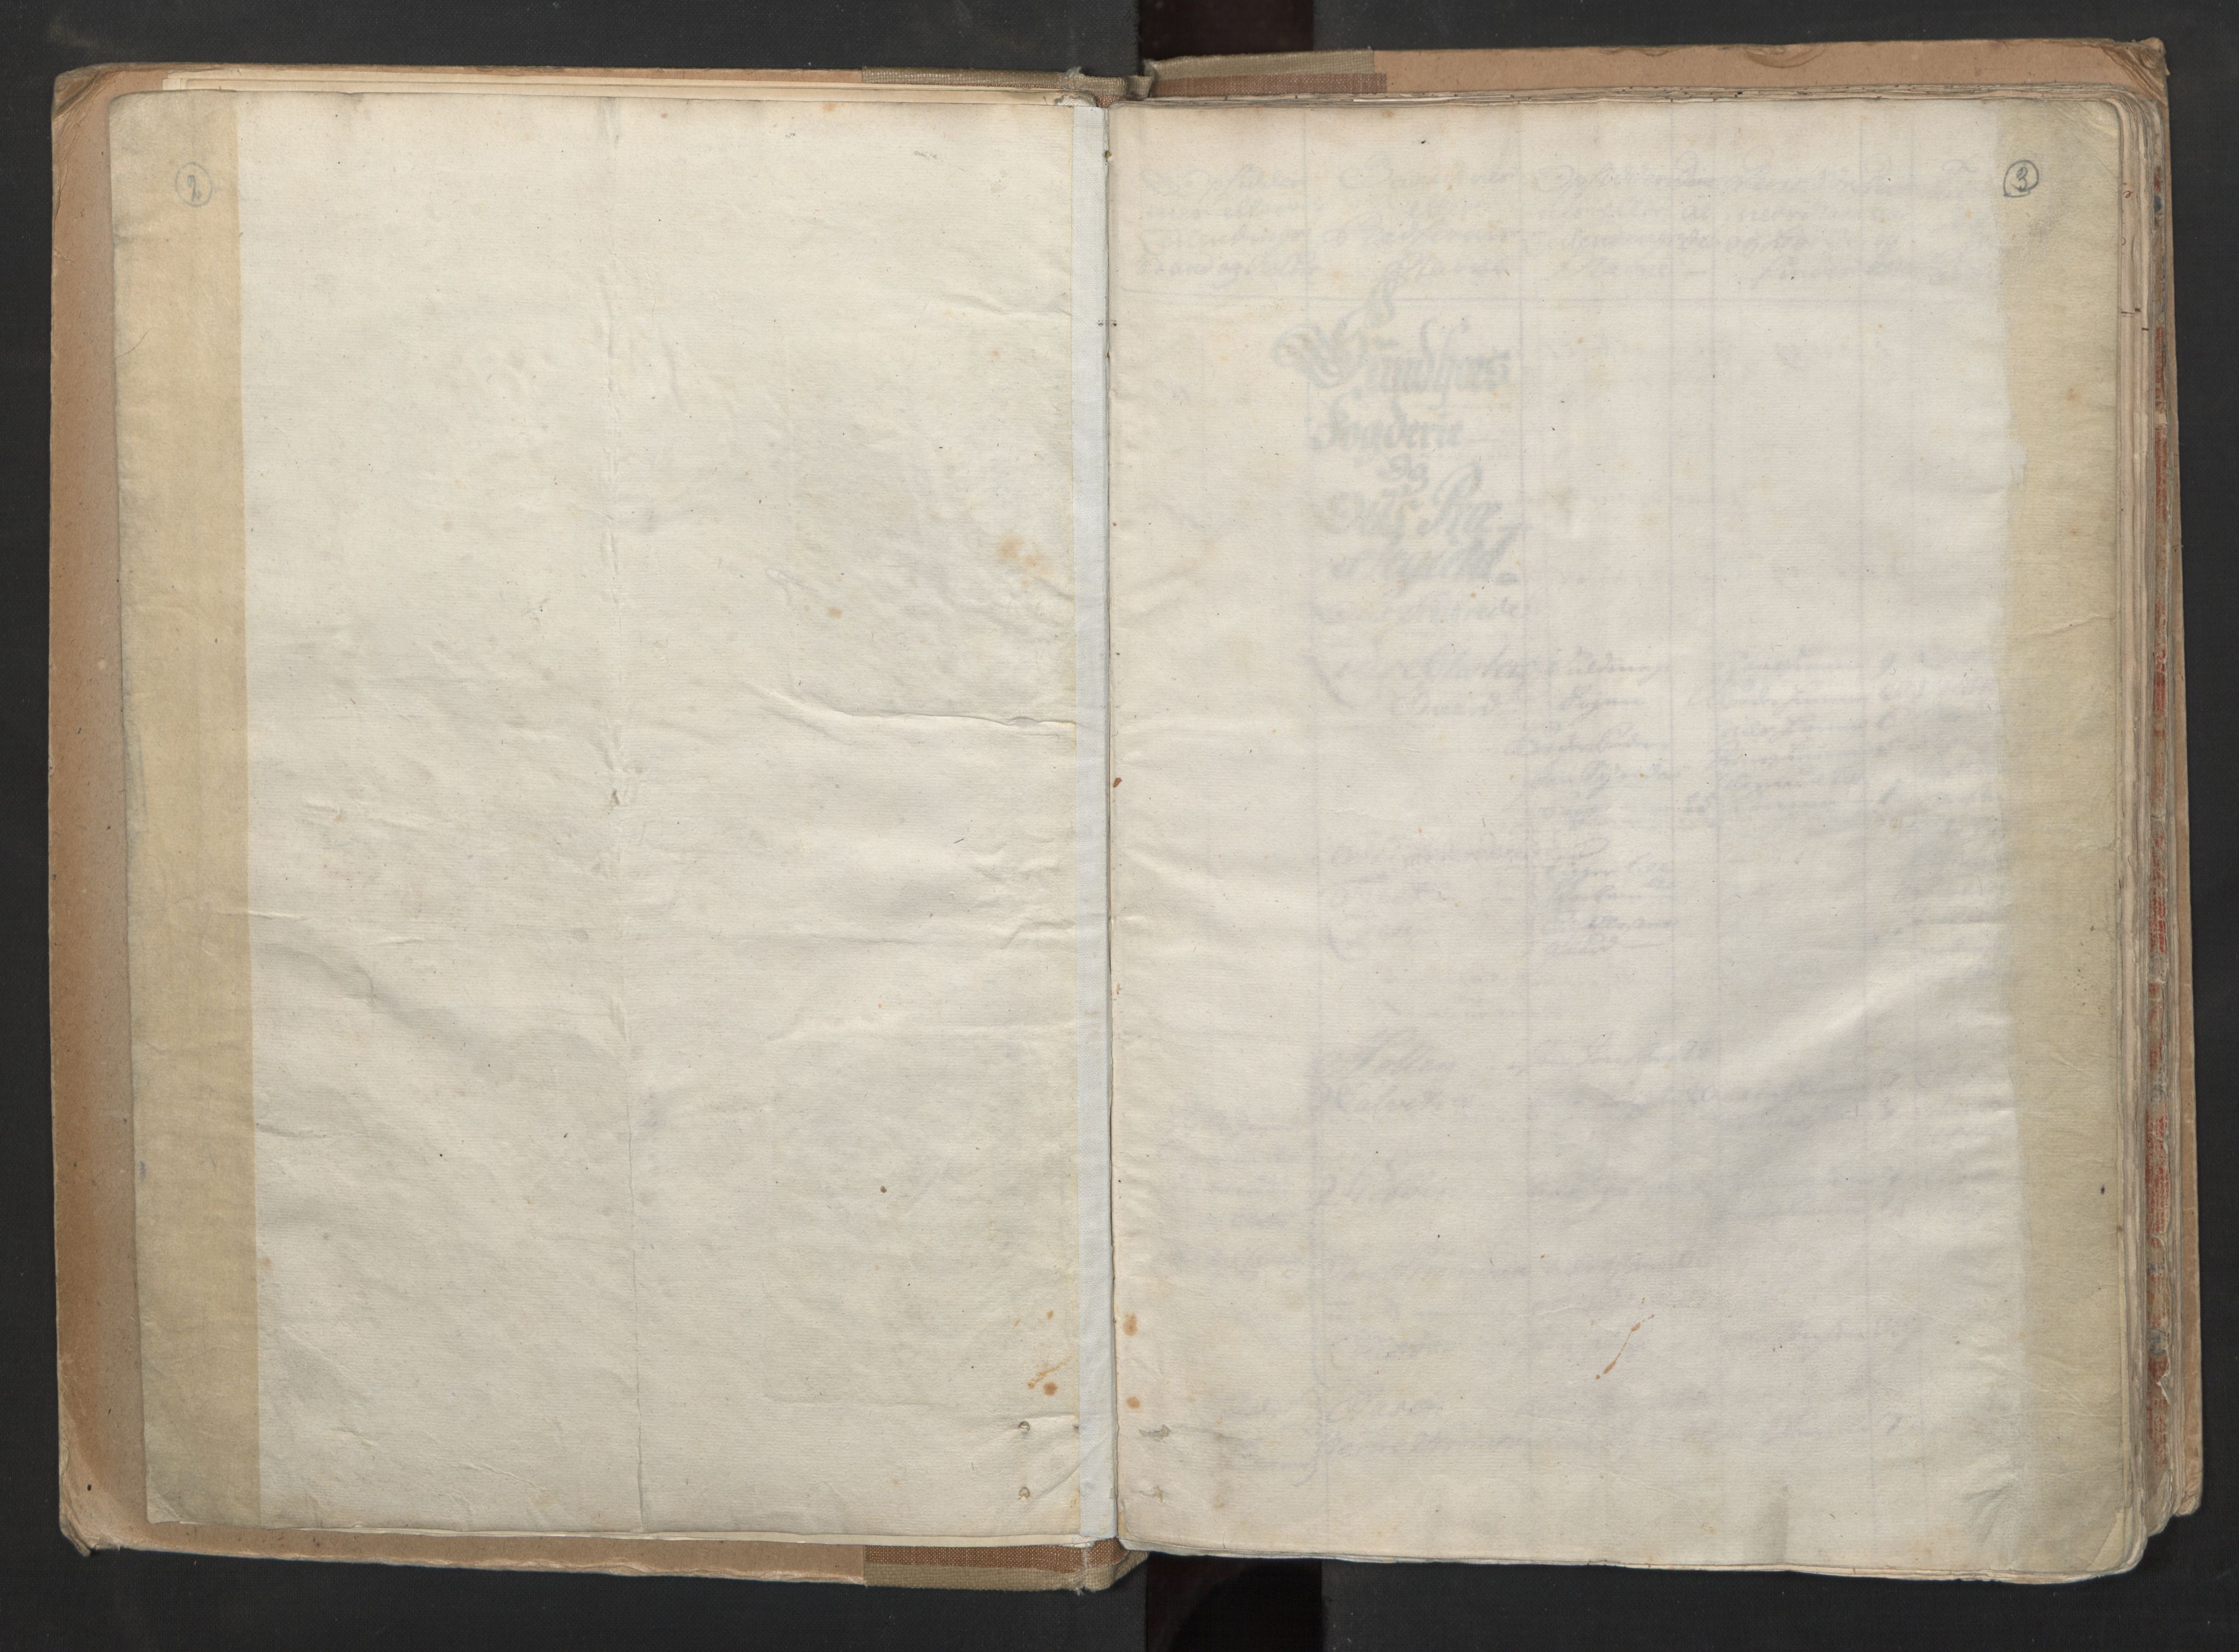 RA, Manntallet 1701, nr. 6: Sunnhordland fogderi og Hardanger fogderi, 1701, s. 2-3